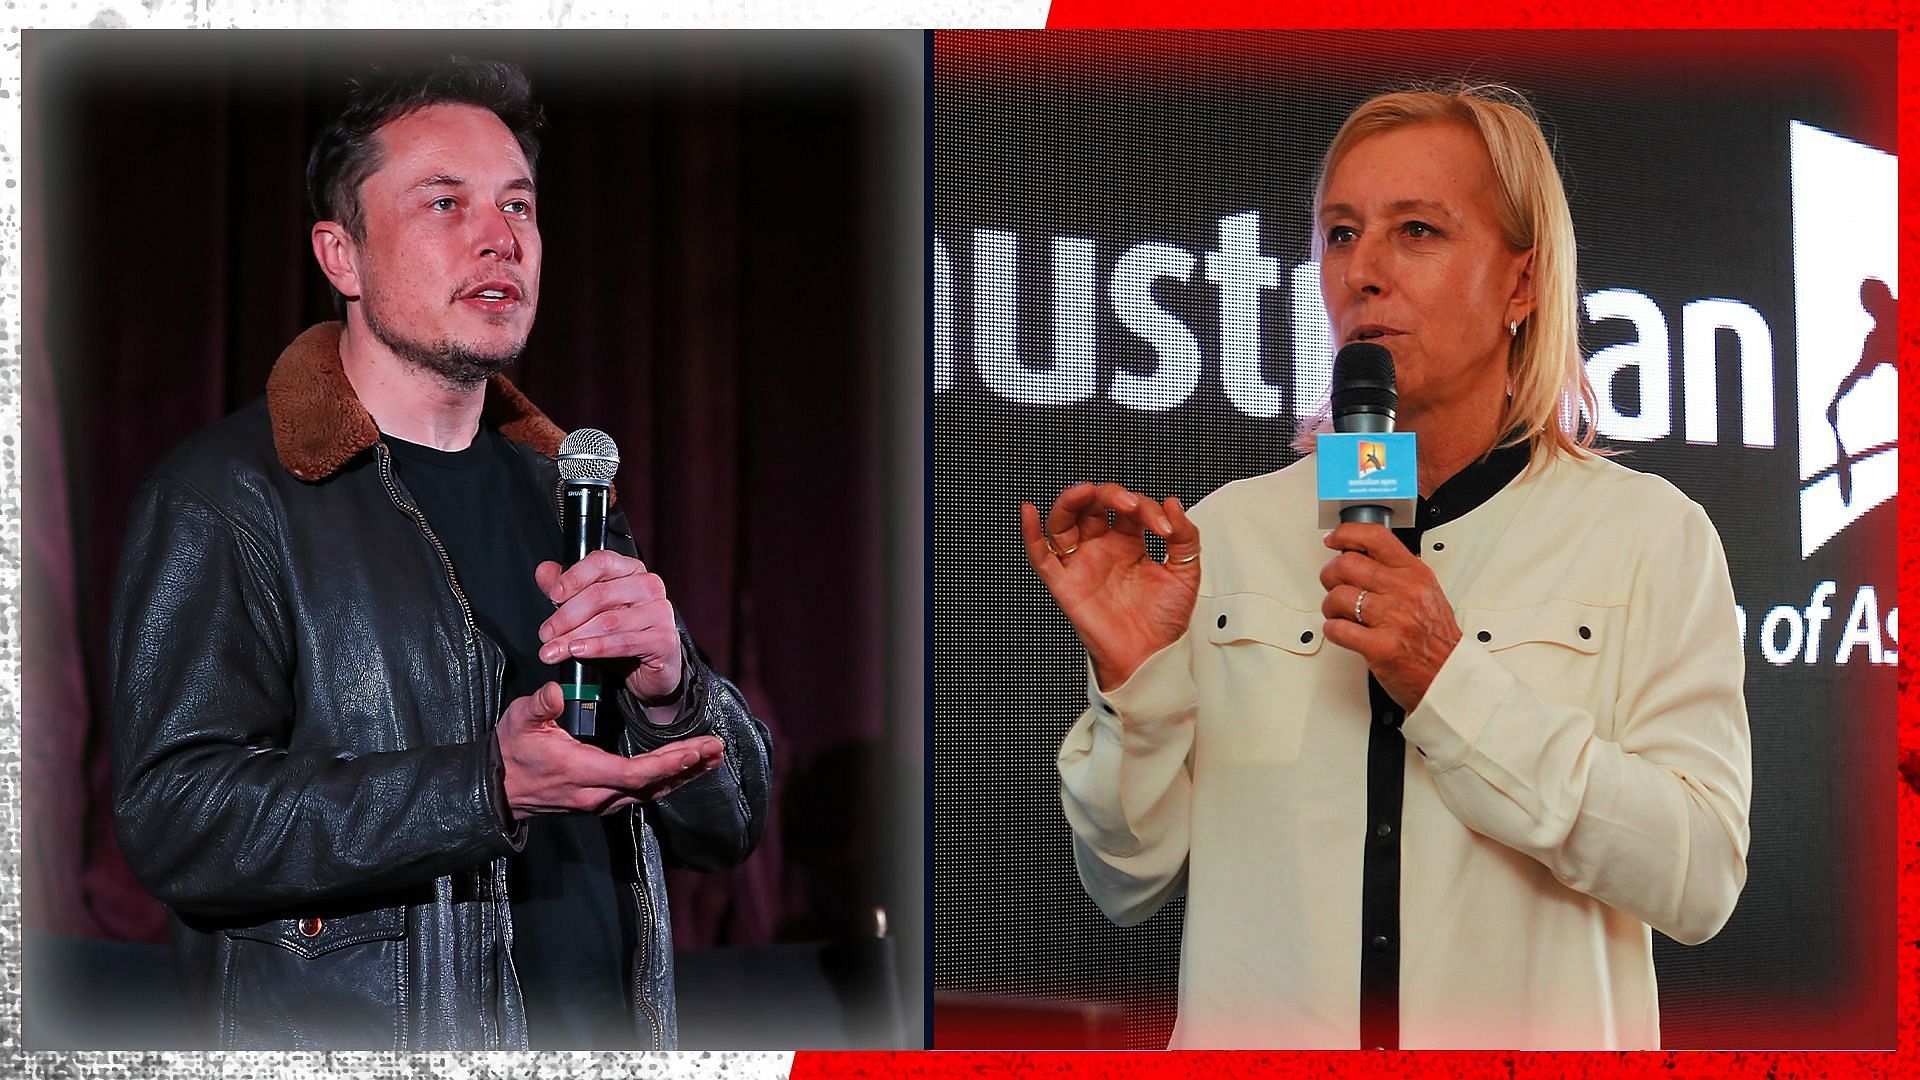 Elon Musk (L) and Martina Navratilova